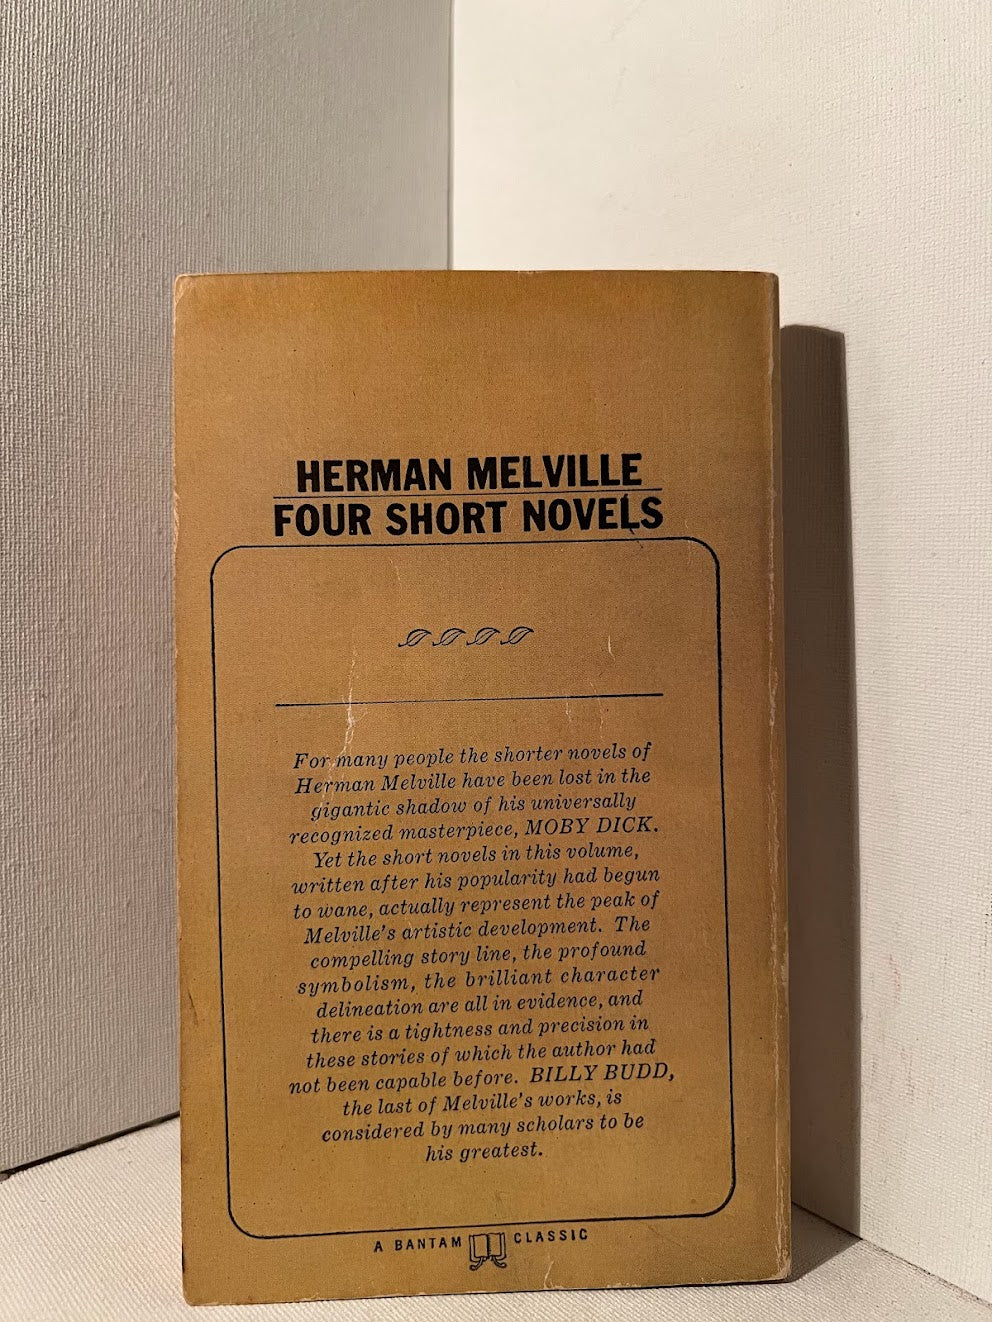 Four Short Novels by Herman Melville